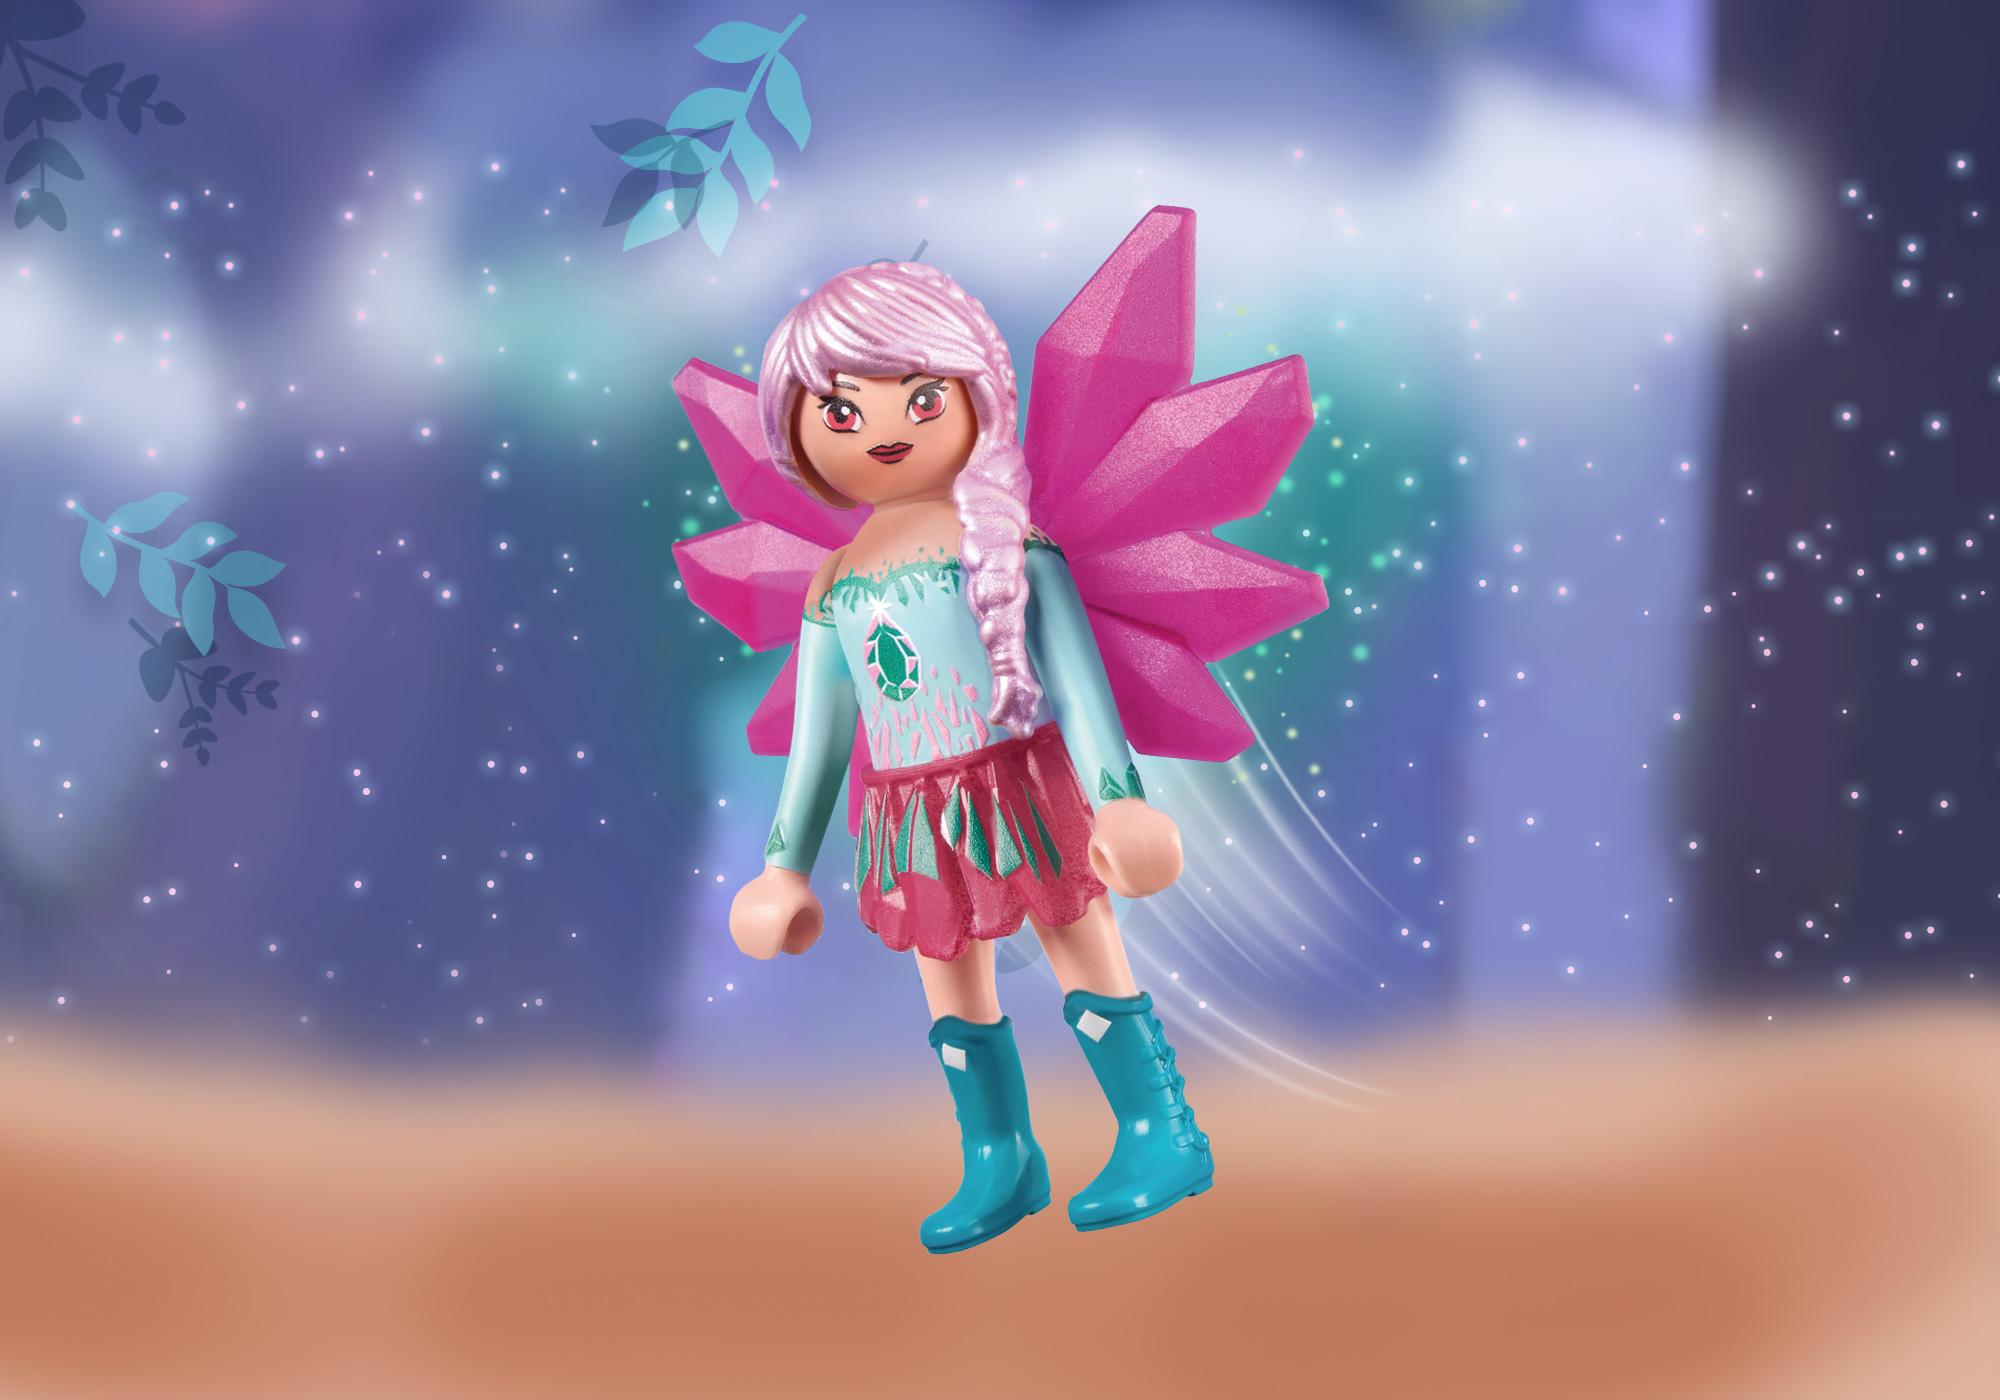 Playmobil Adventures of Ayuma Crystal Fairy Elvi (71181) au meilleur prix  sur